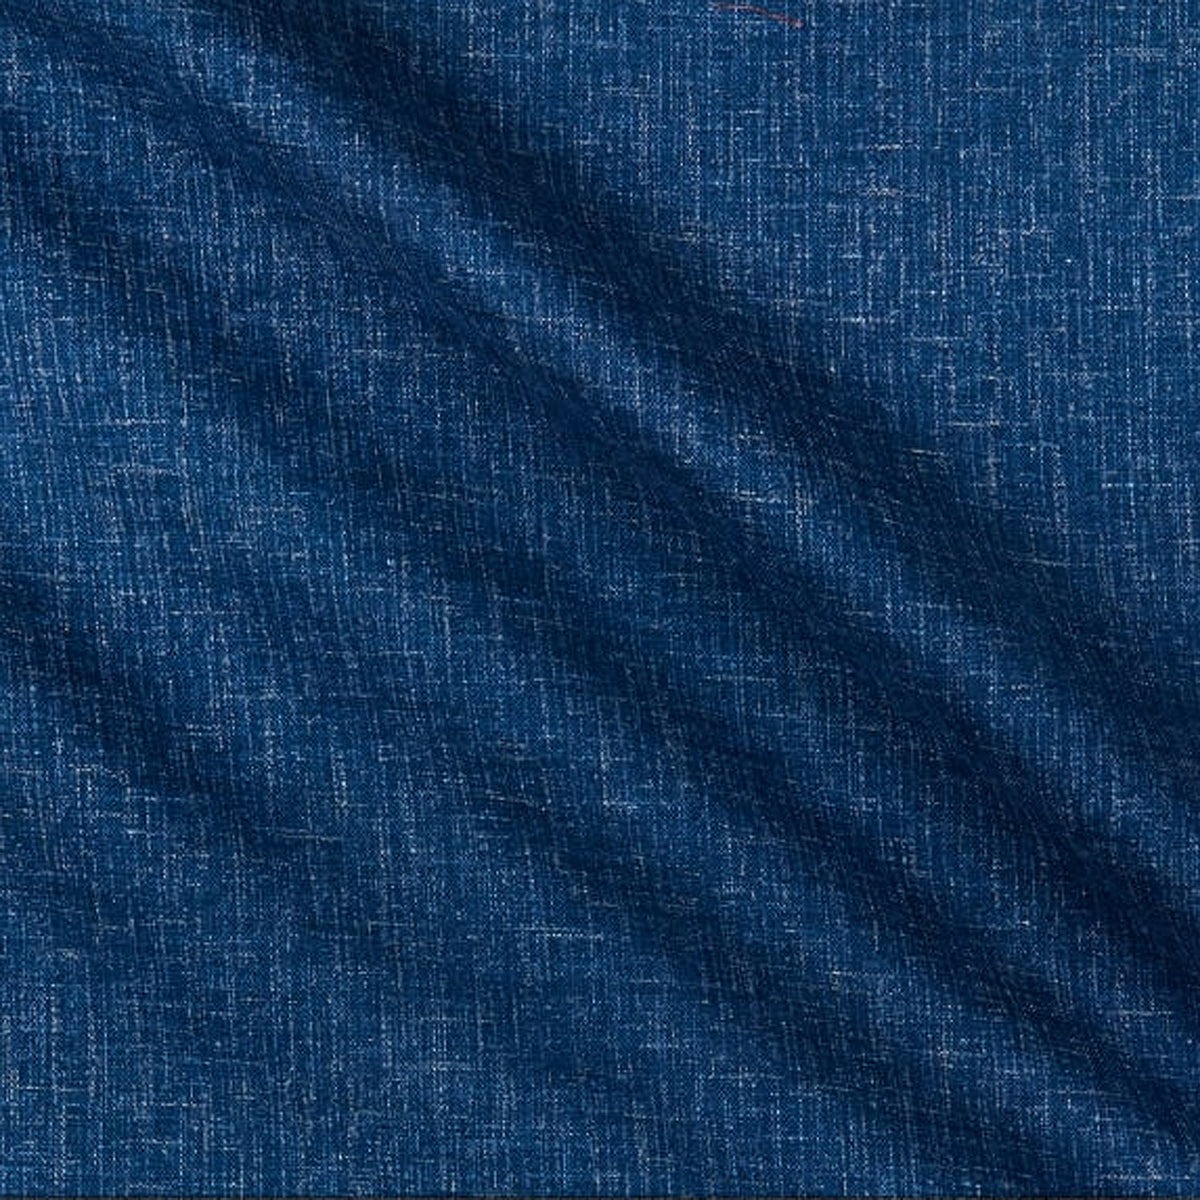 Japanese Nara Cotton Canvas Indigo Handkerchief 27.5 x 27.5 "TEX"